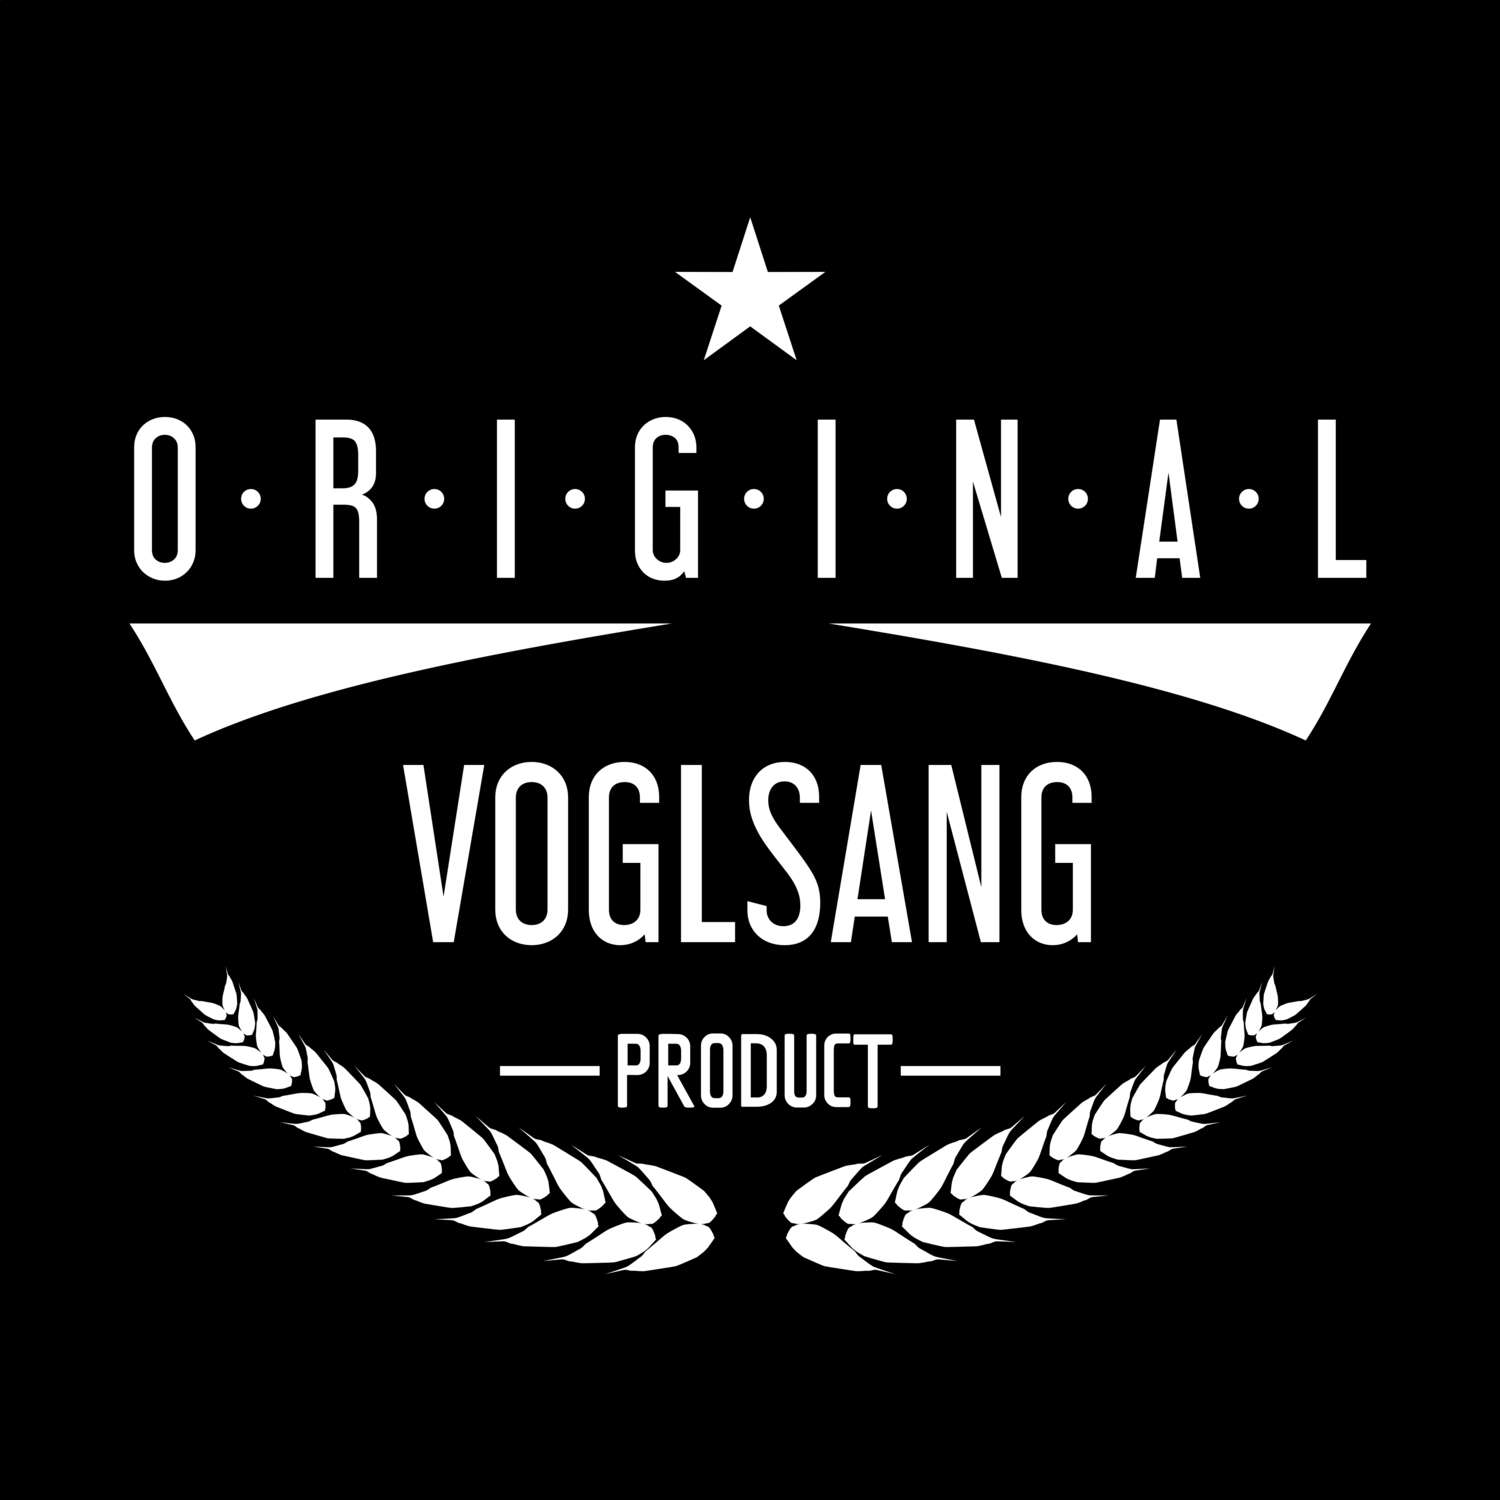 Voglsang T-Shirt »Original Product«